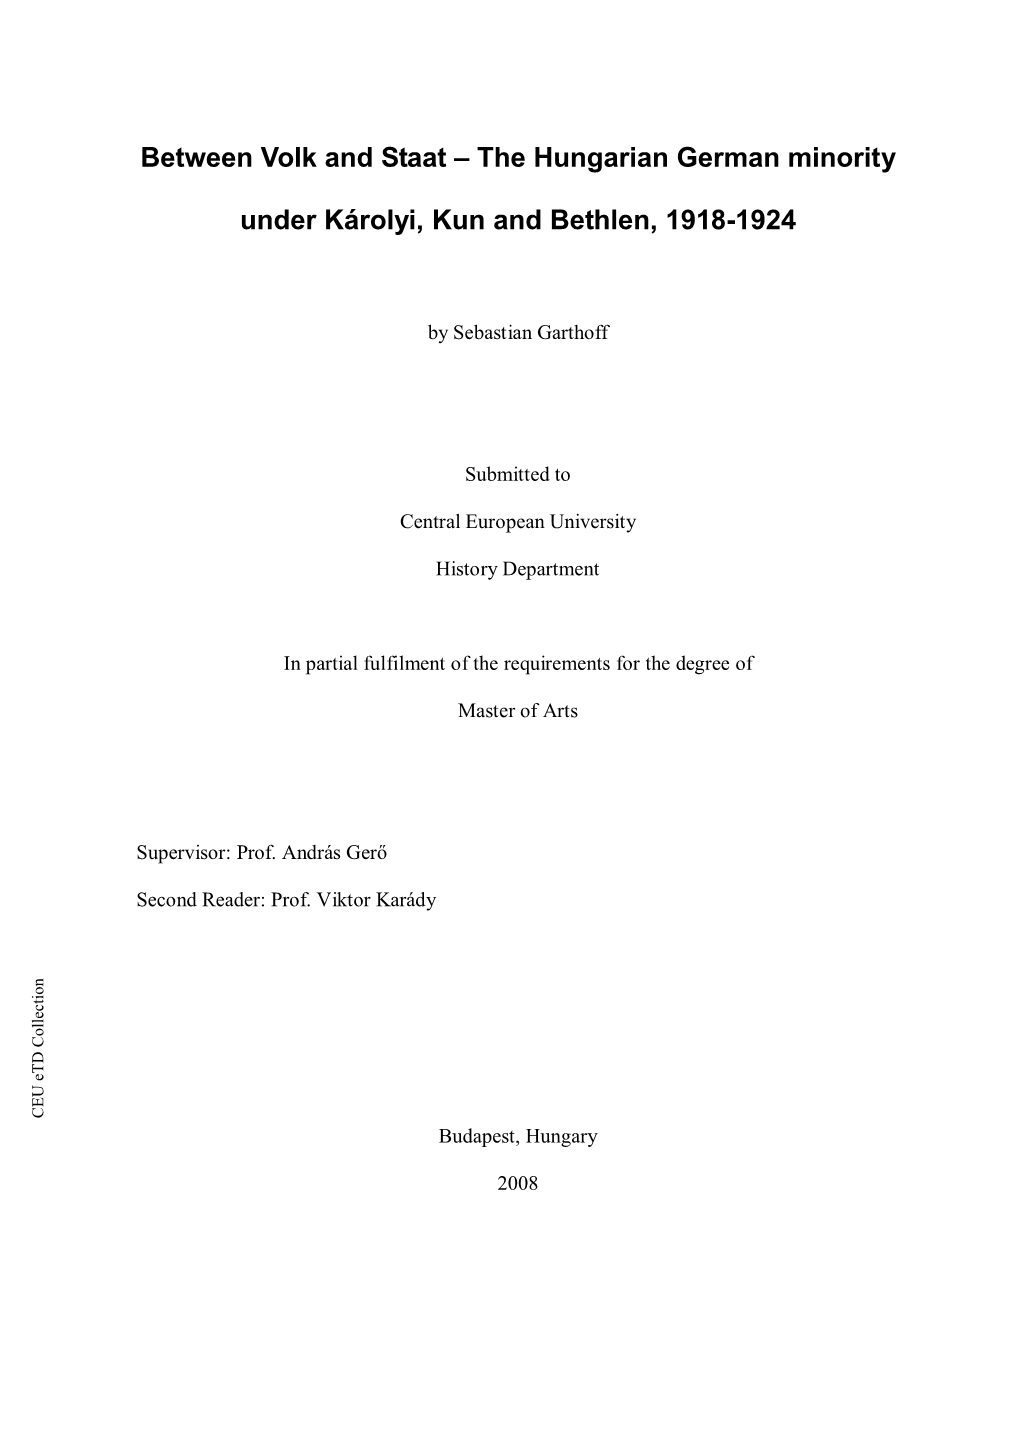 The Hungarian German Minority Under Károlyi, Kun and Bethlen